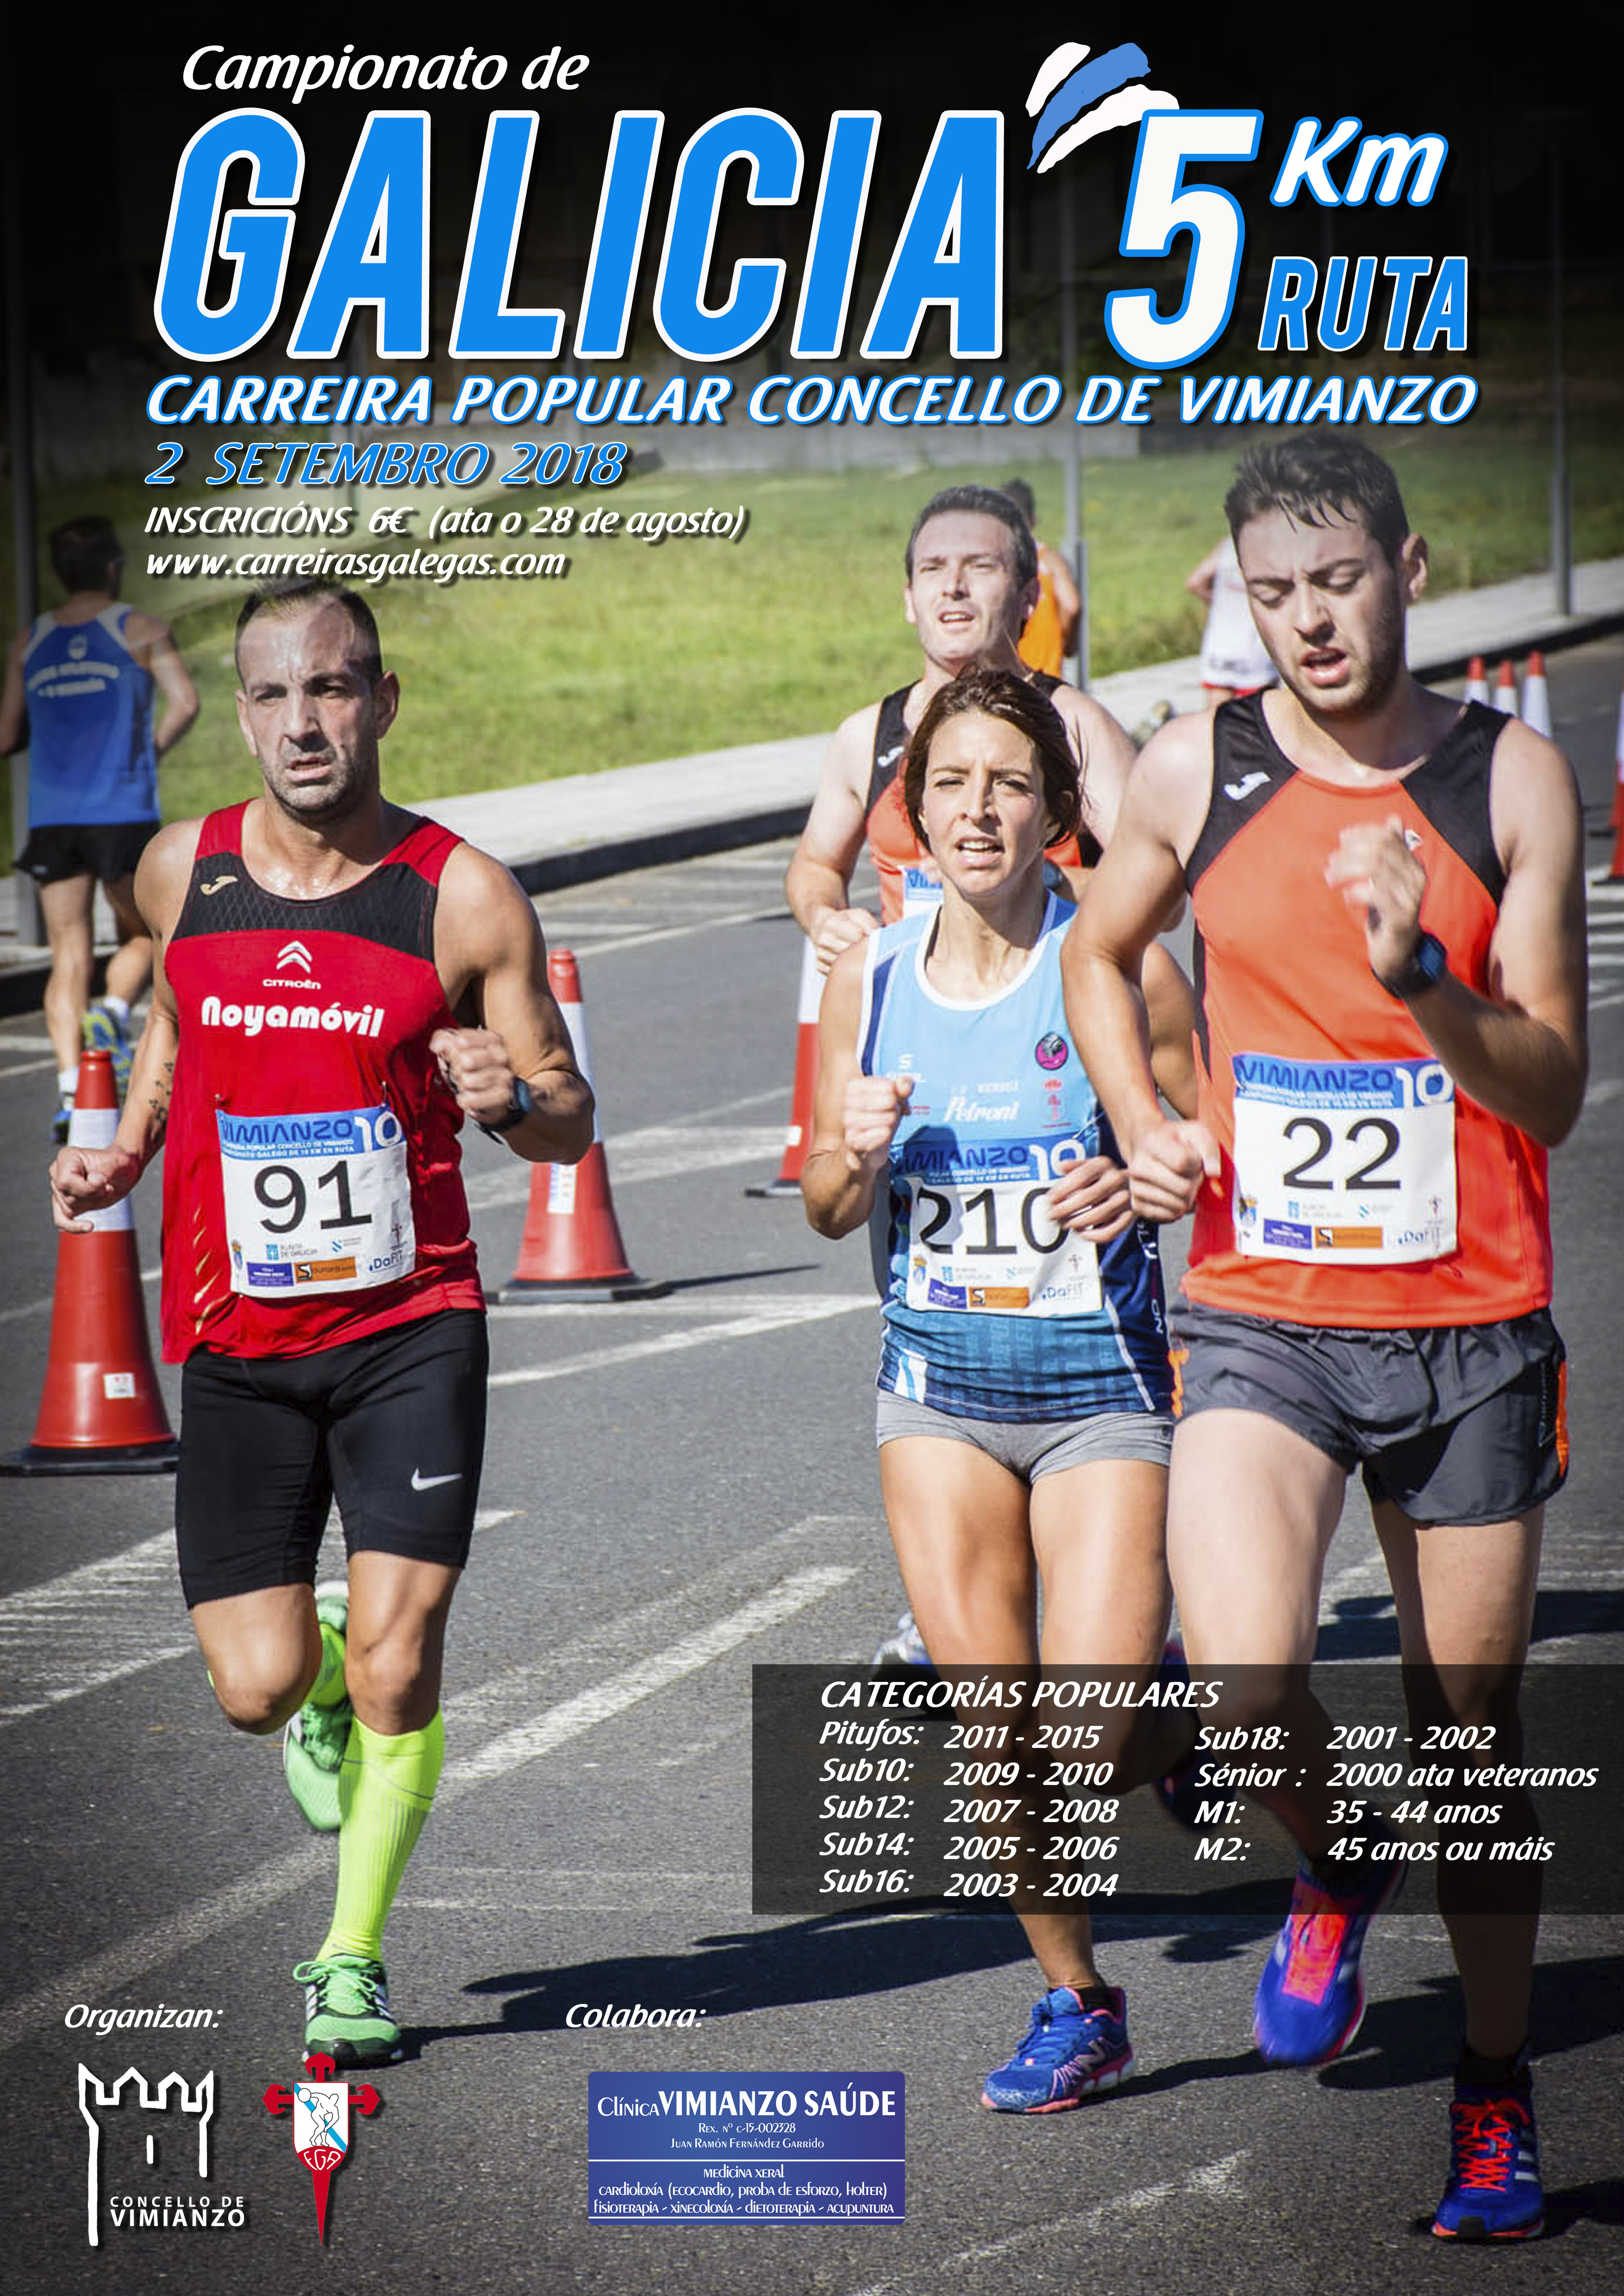 Campionato de Galicia de 5 Km. 2017/2018